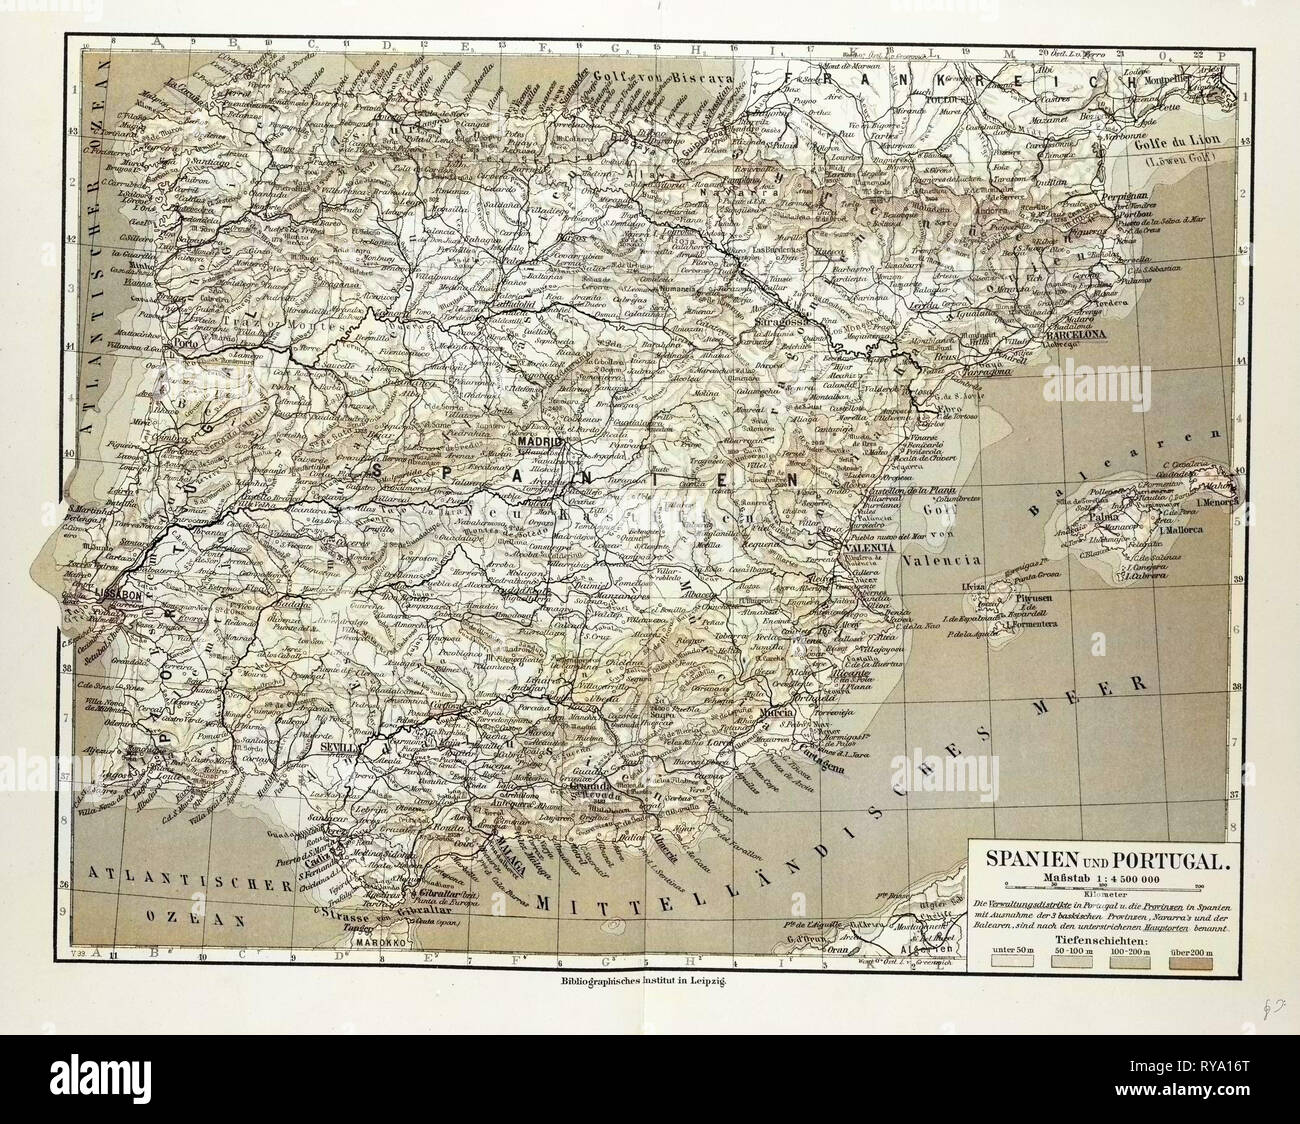 Digital political map of Portugal 1460